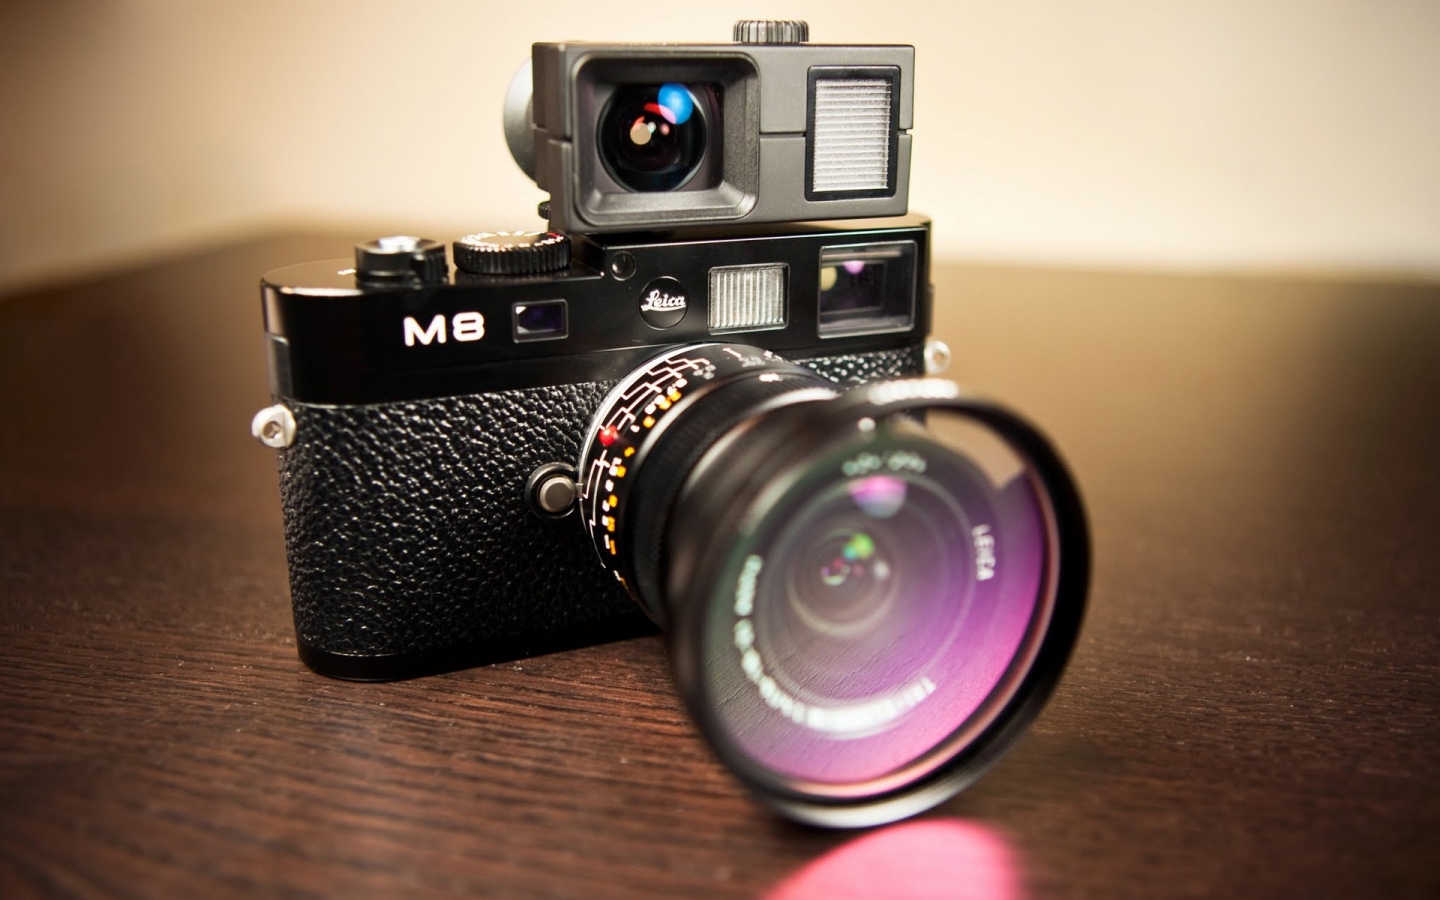 Leica M8 for 1440 x 900 widescreen resolution